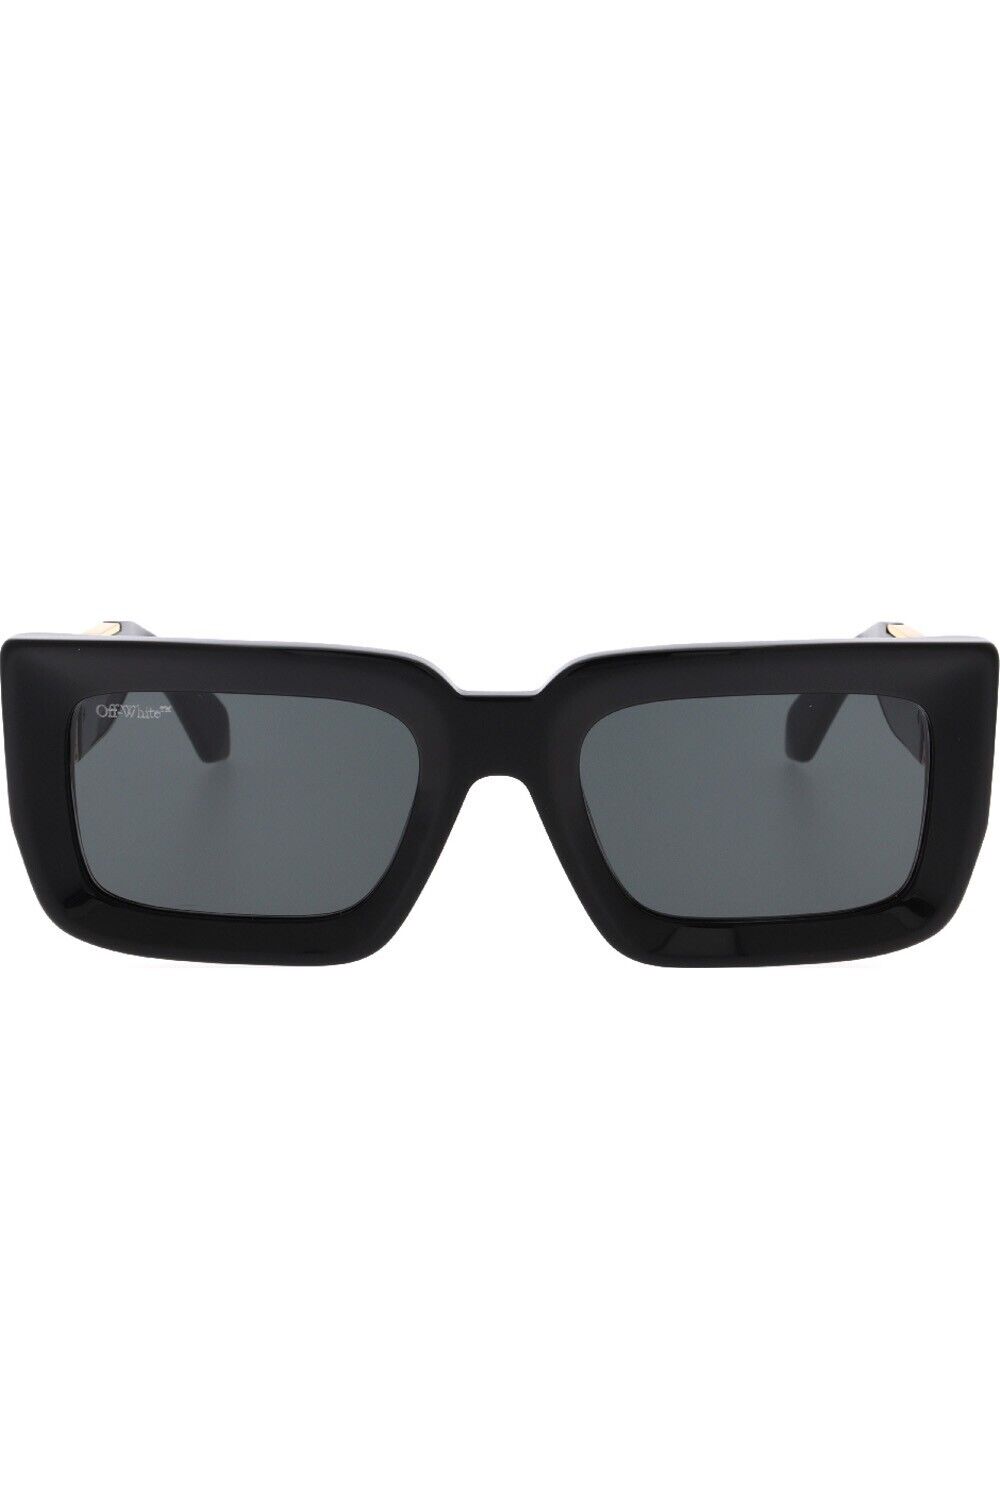 Off-White OERI073S23-PLA0011007-55 55mm New Sunglasses